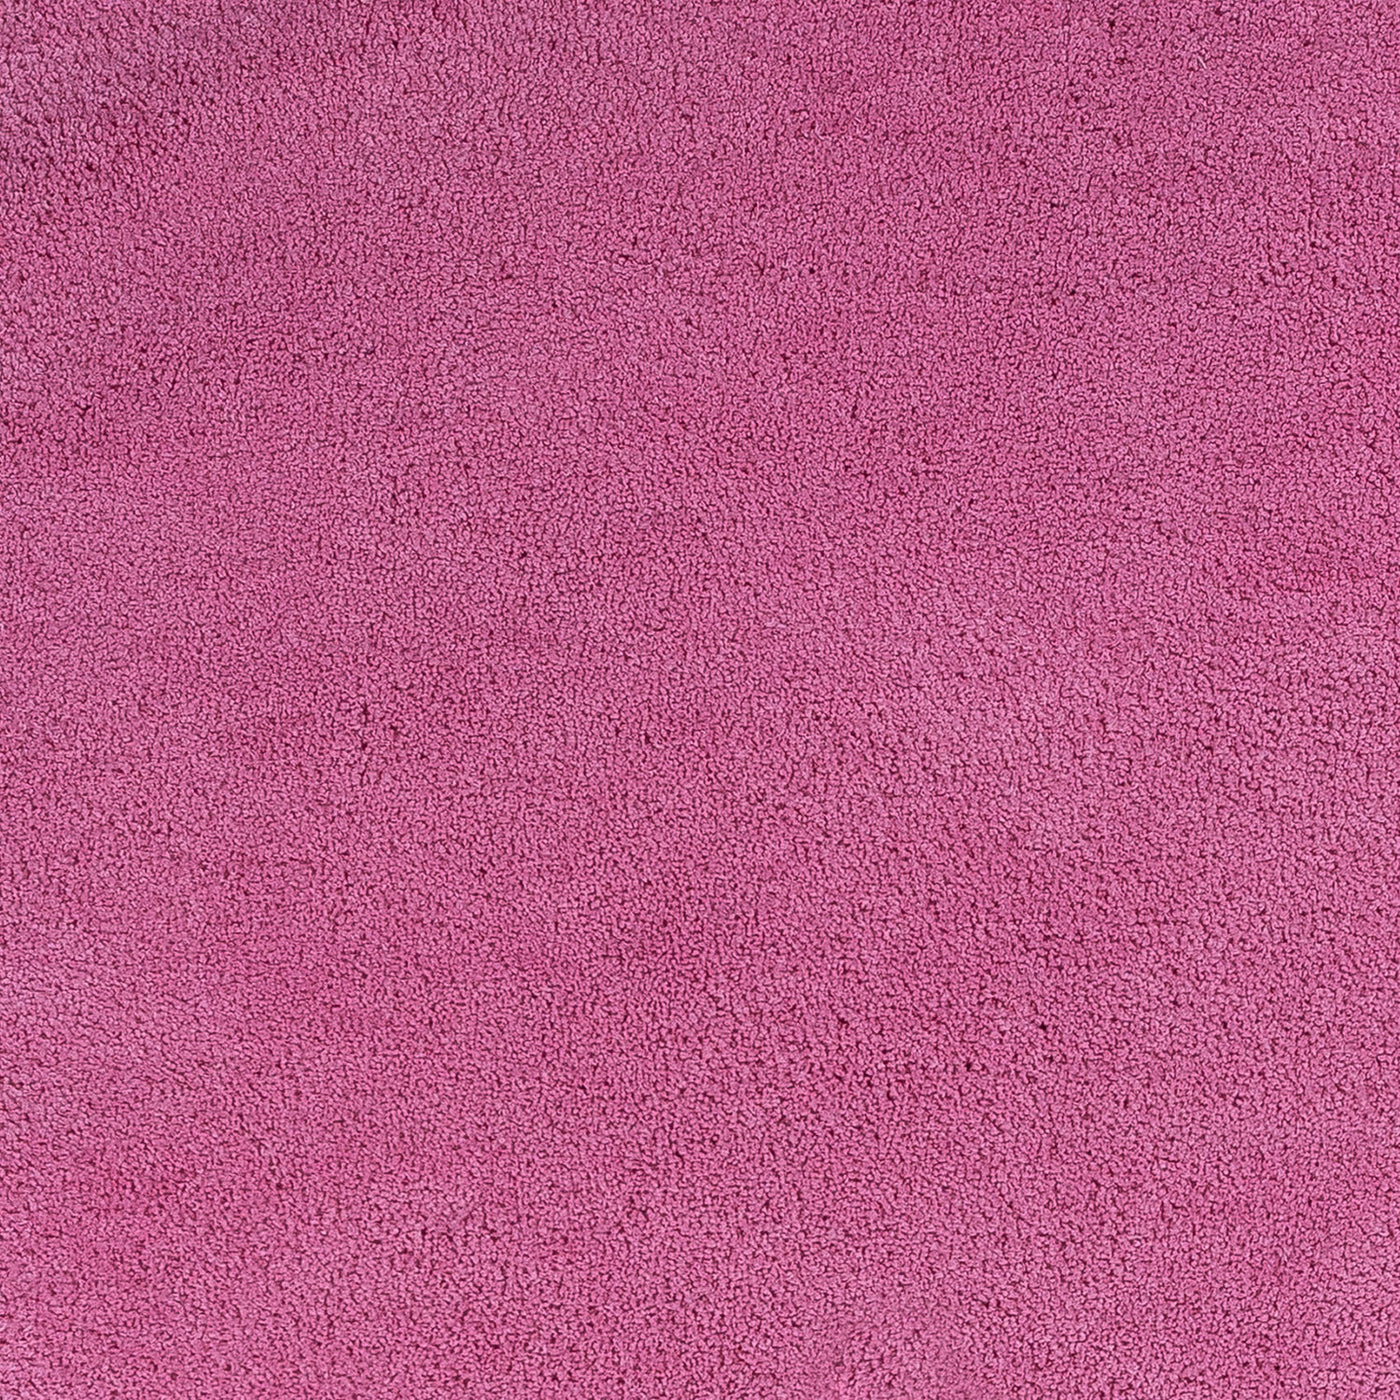 Bahia XII 8' - Hot Pink Round Area Rug